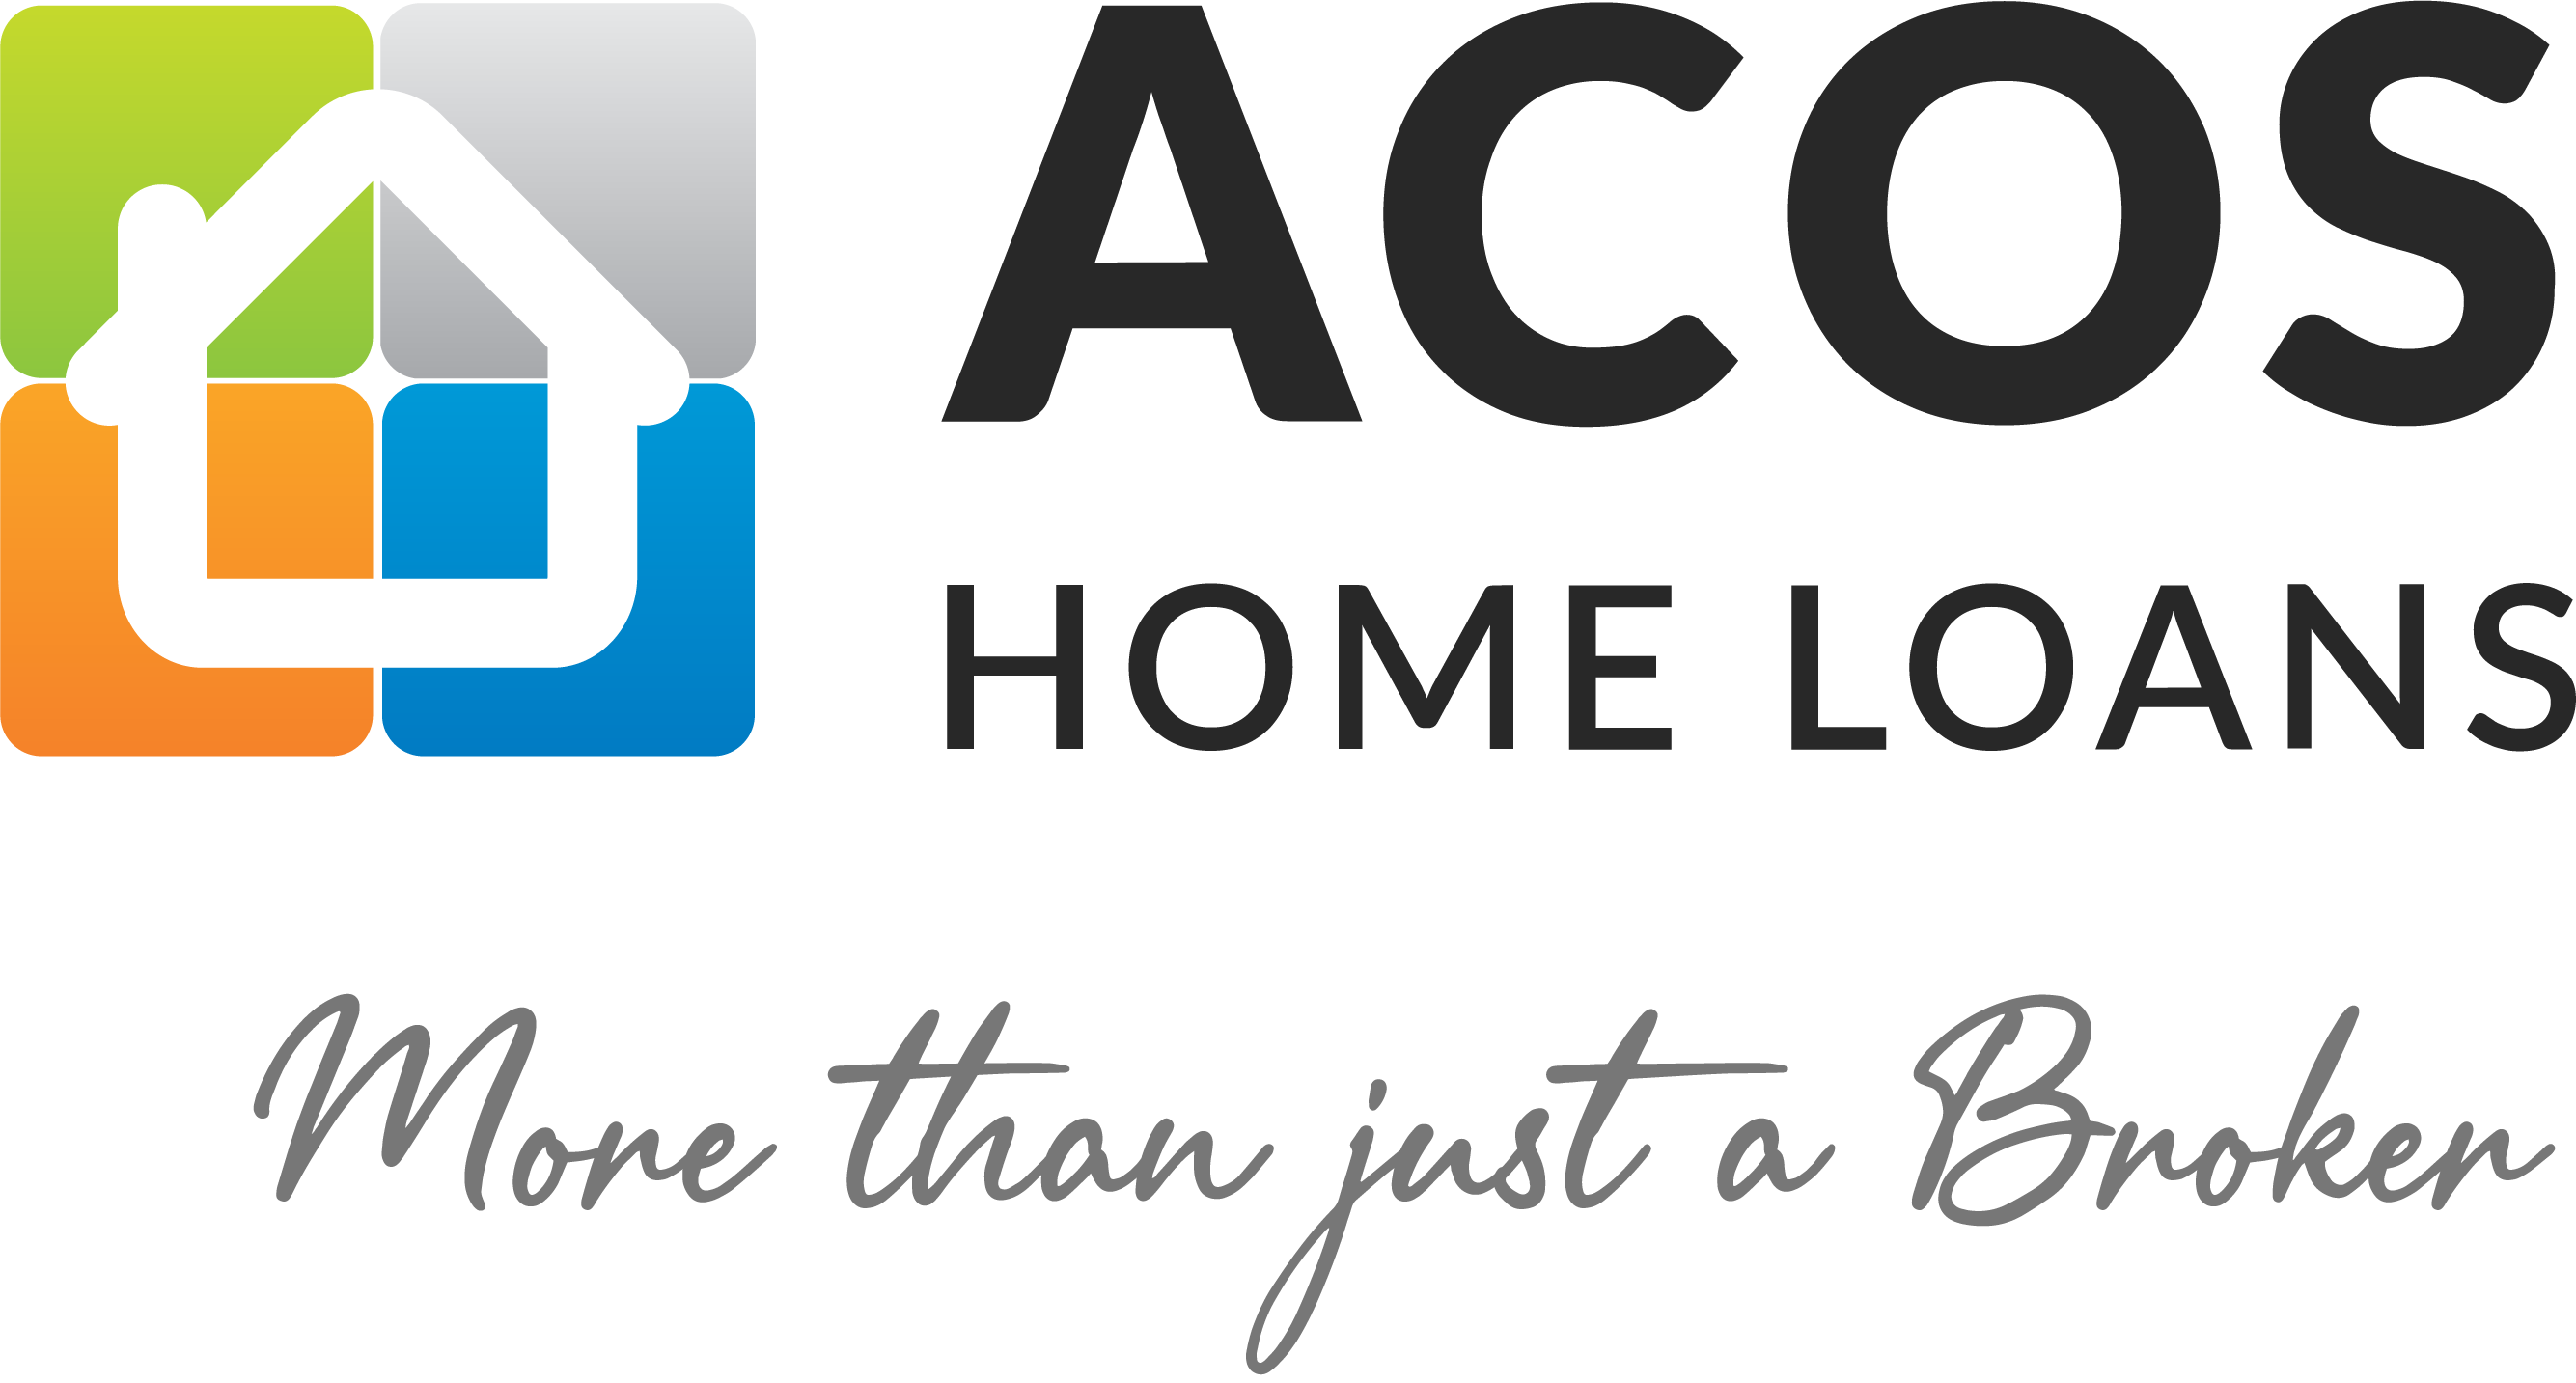 ACOS Home Loans